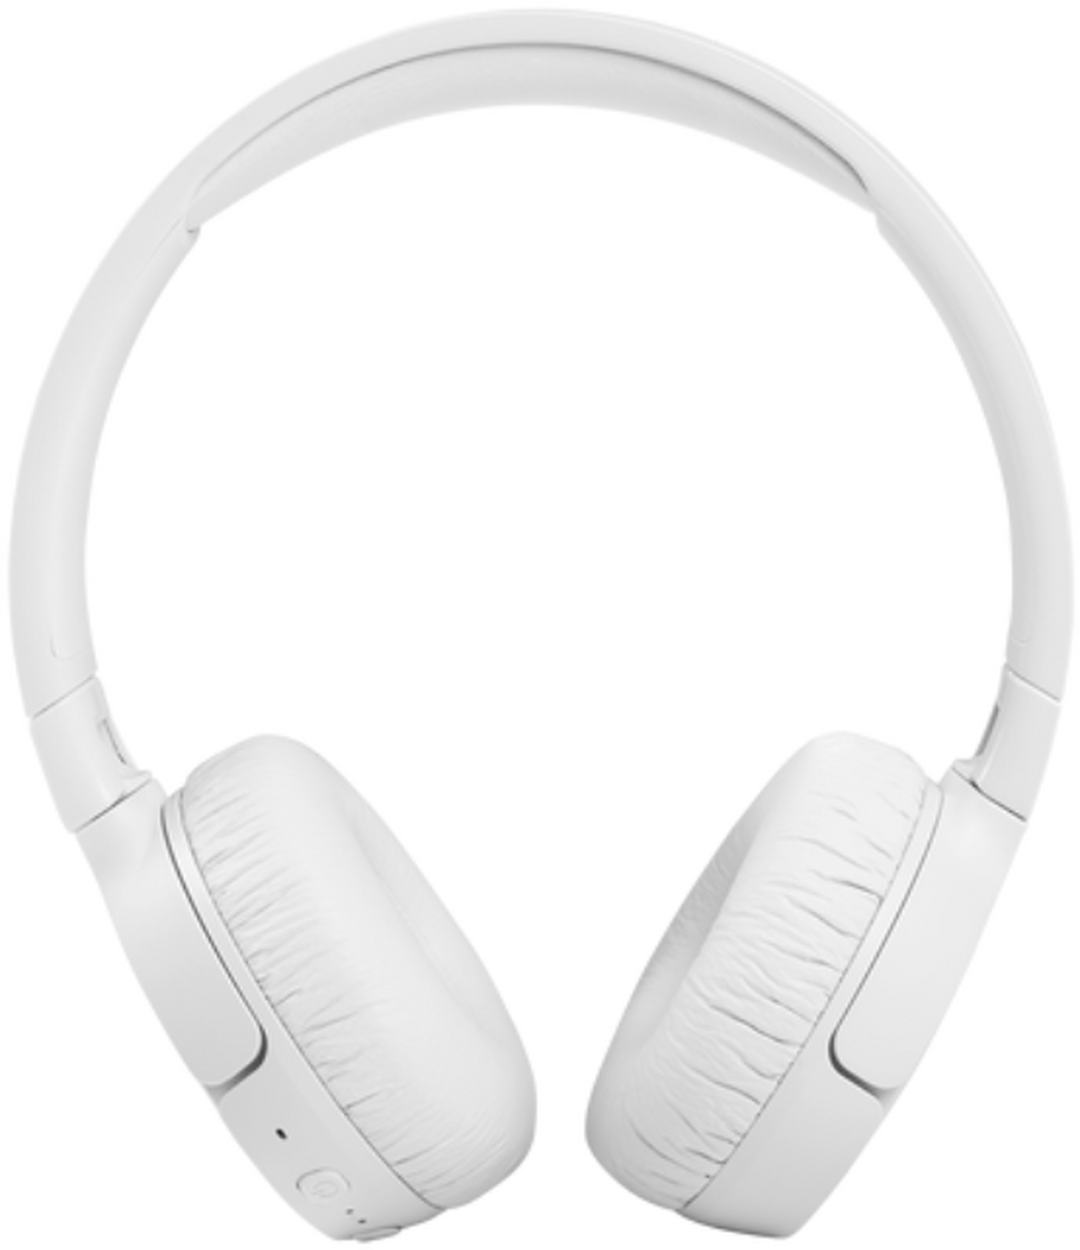 JBL Tune 660NC Noise Cancellation Headphones - White